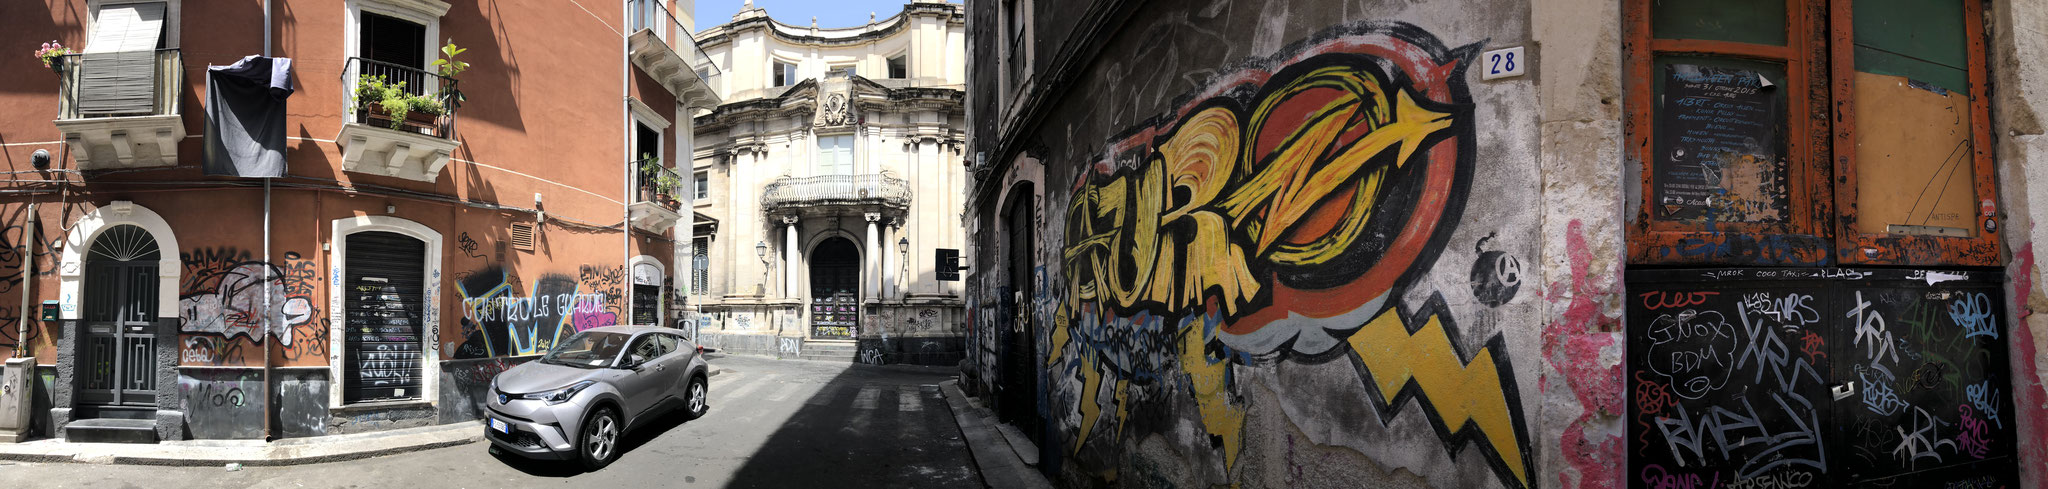 Streets of Catania, Sicily, Italy (June 2019)